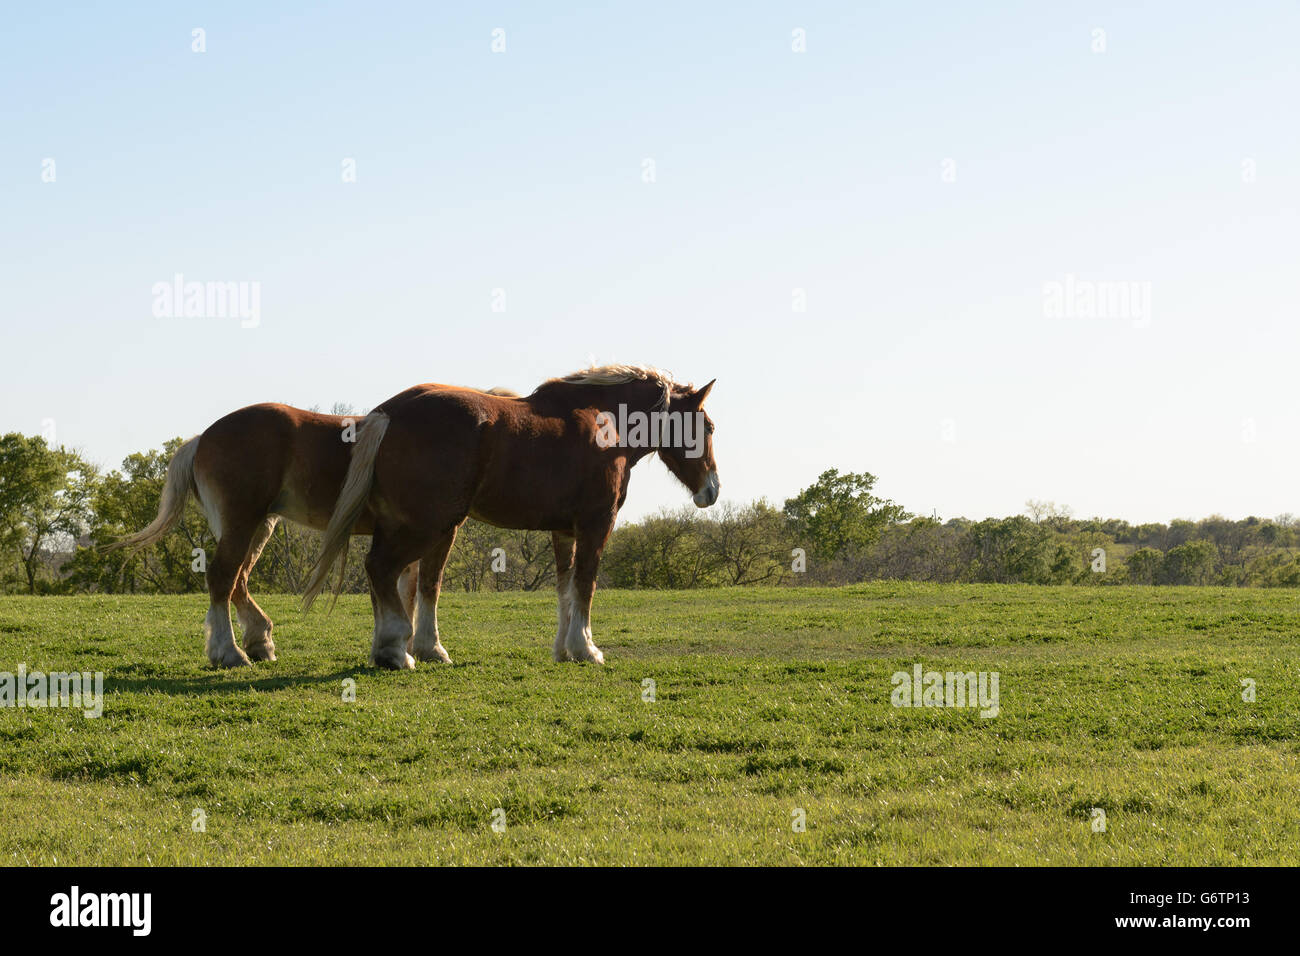 Two horses walking on open green grass field Stock Photo